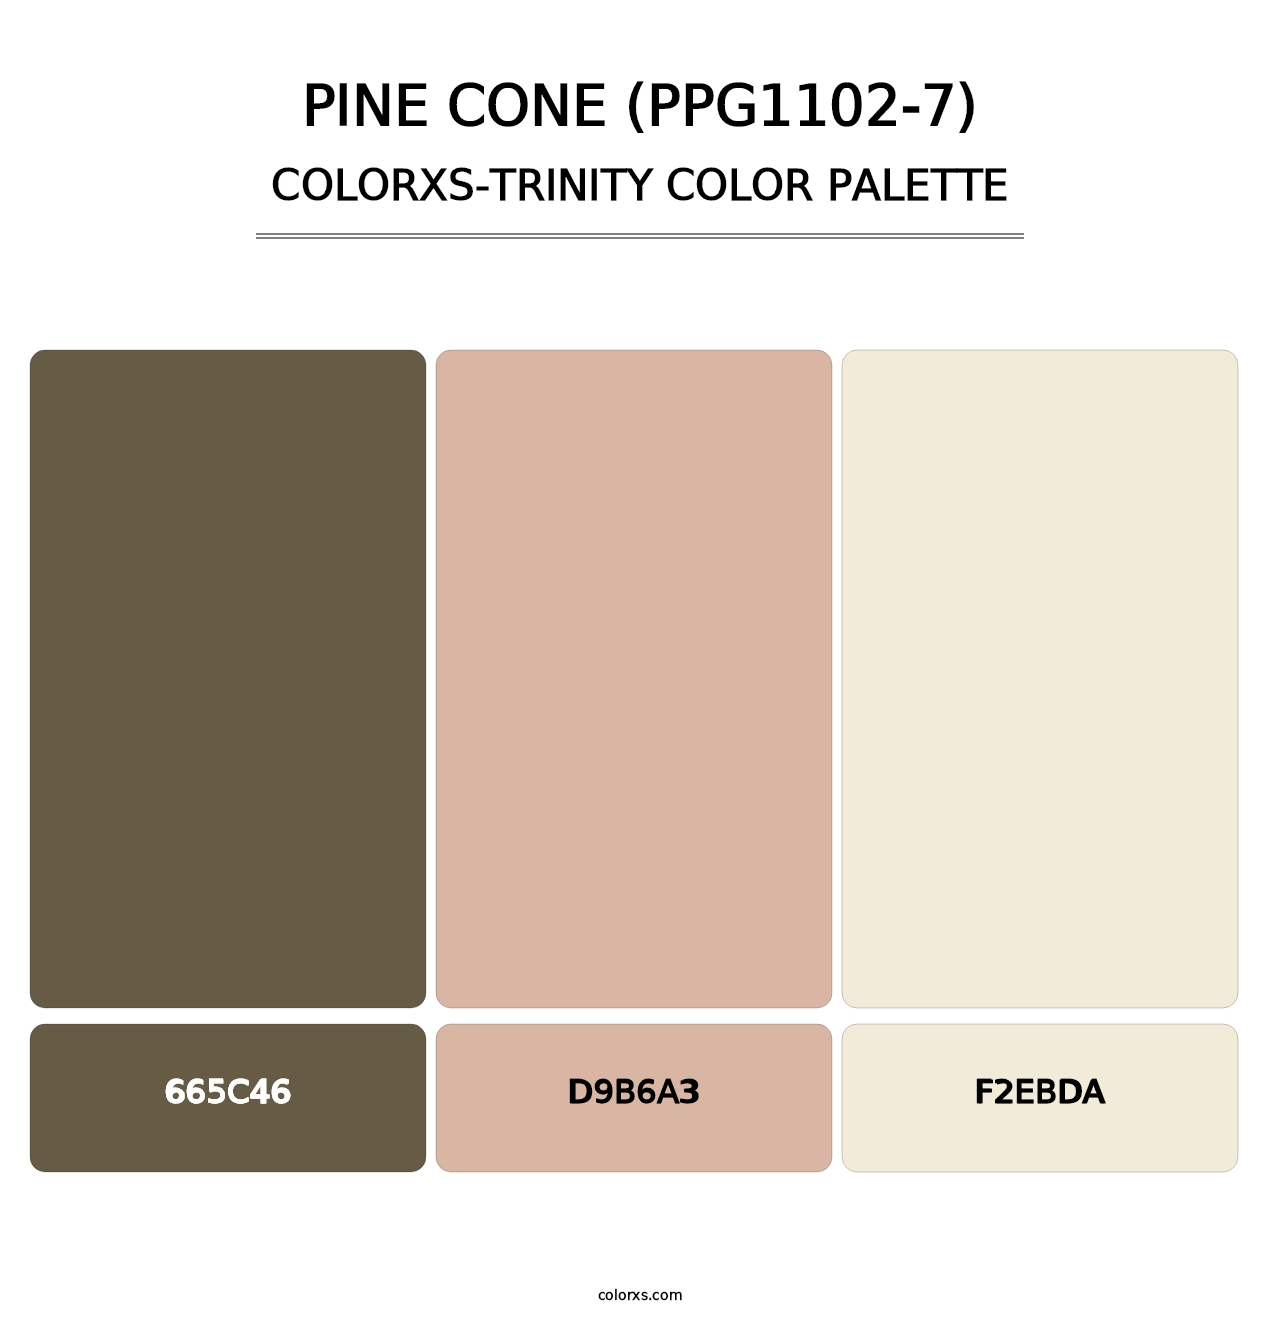 Pine Cone (PPG1102-7) - Colorxs Trinity Palette